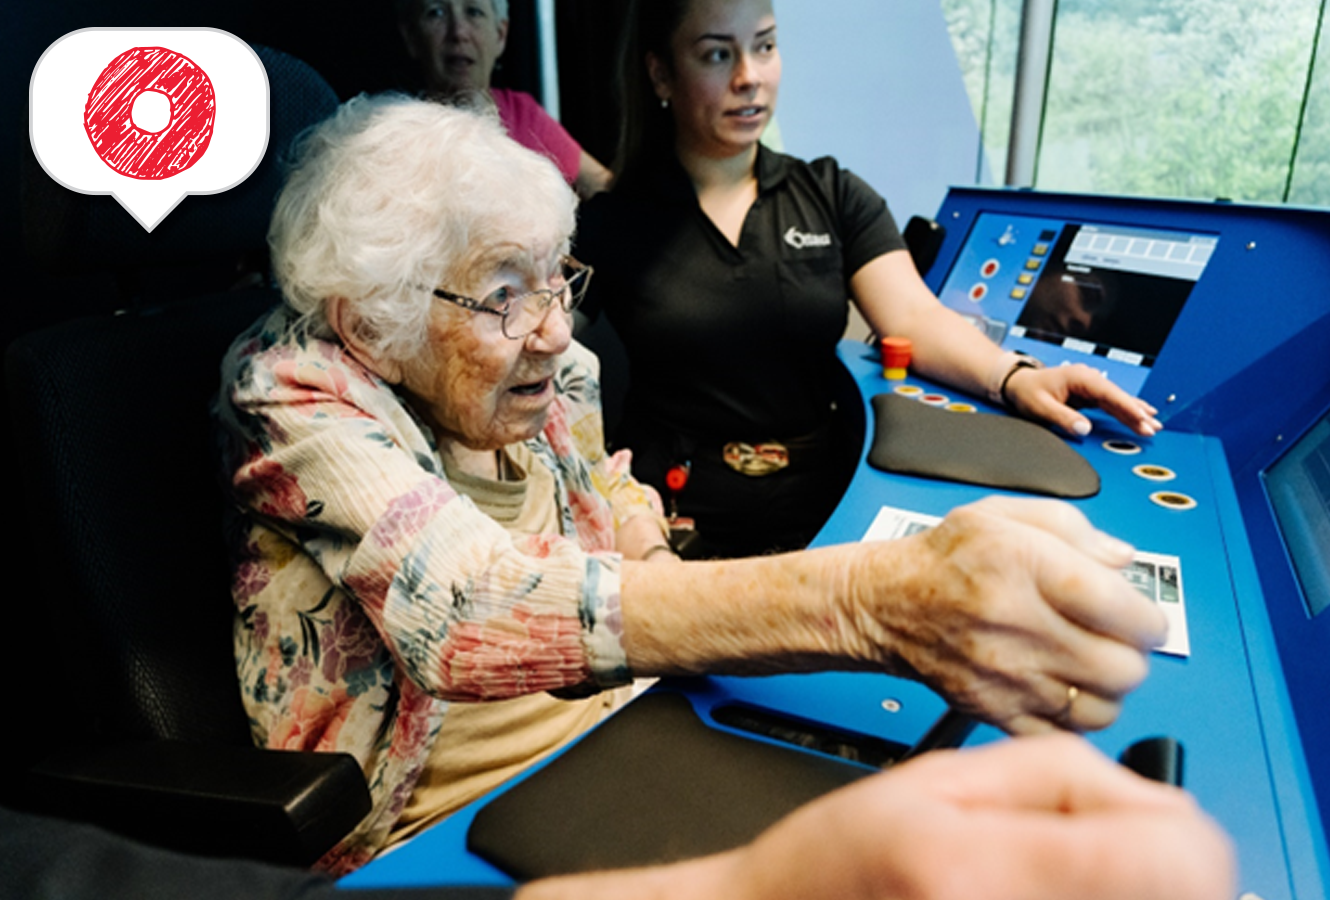 107-year-old Juanita operating the Stadler FLIRT simulator